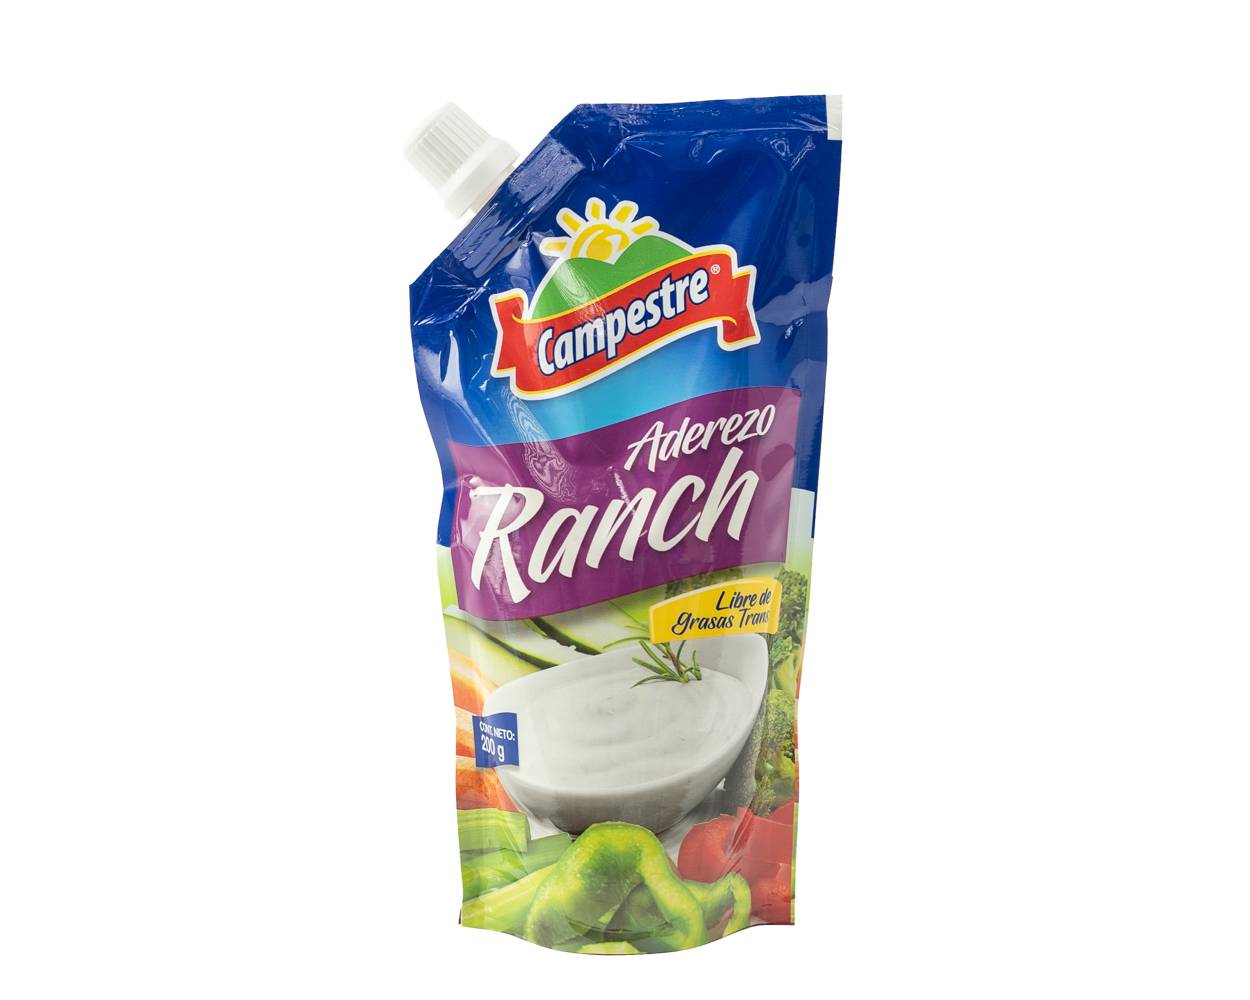 Campestre aderezo ranch  (200 g)